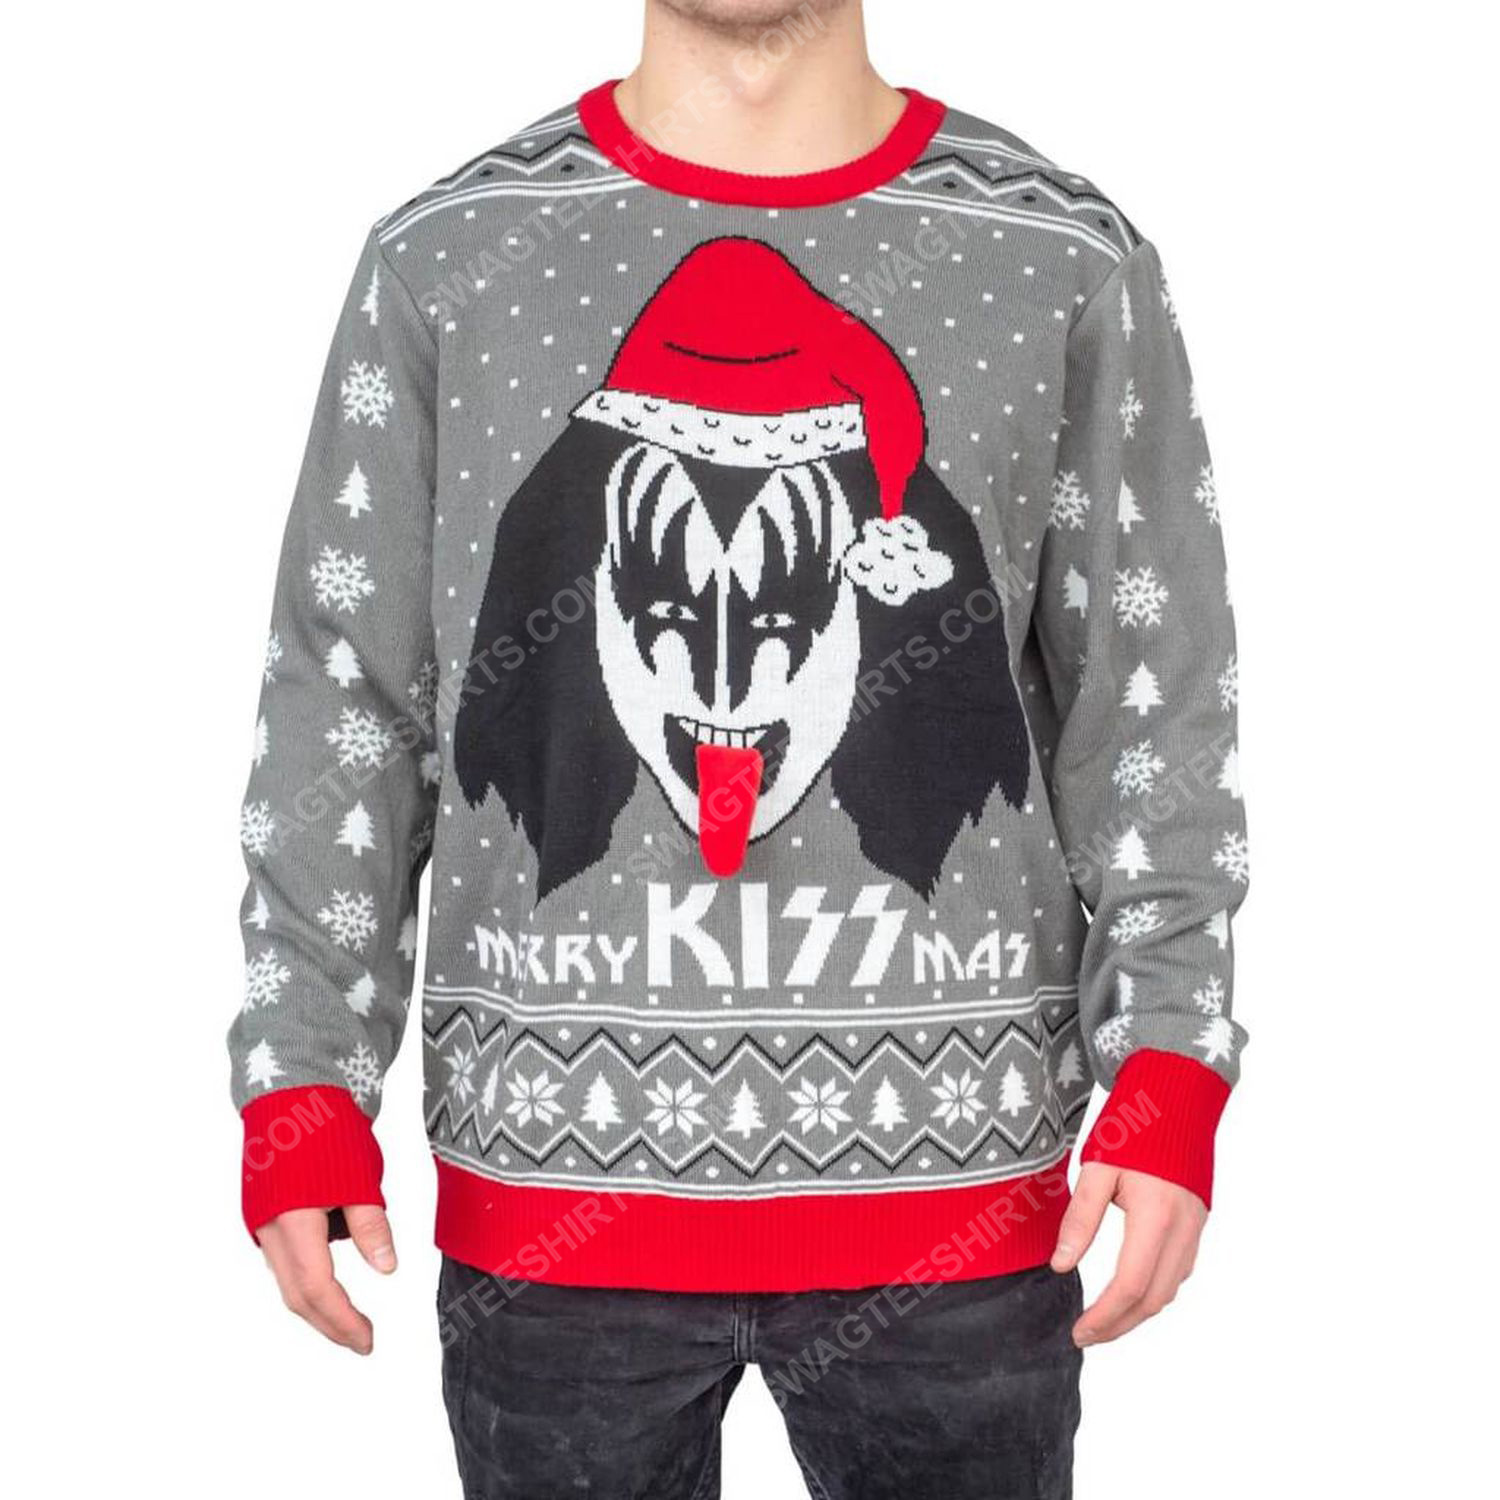 Merry kiss mas flappy kiss rock band full print ugly christmas sweater 2